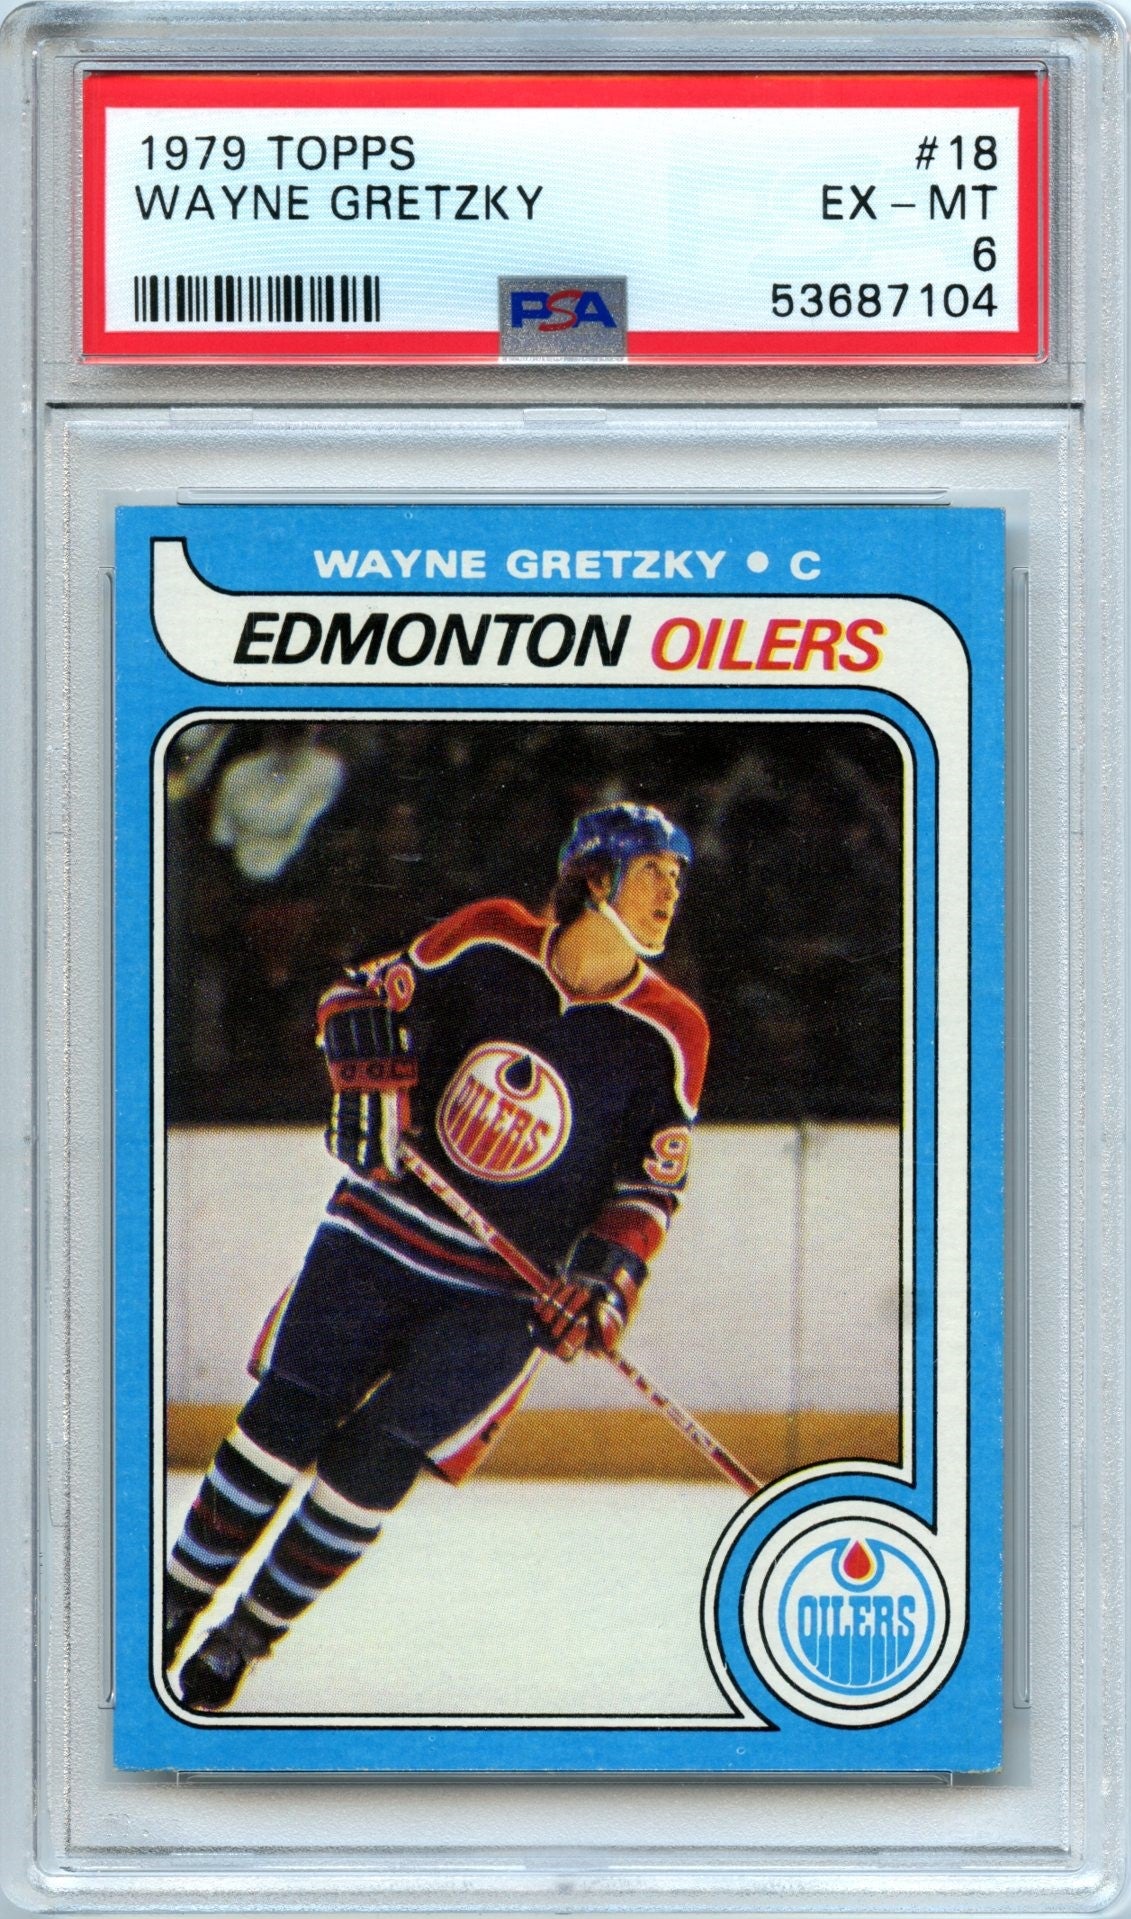 1979 Topps Hockey Complete Set Break 264 Spot Random Card (Wayne Gretzky Rookie PSA 6, etc.!)